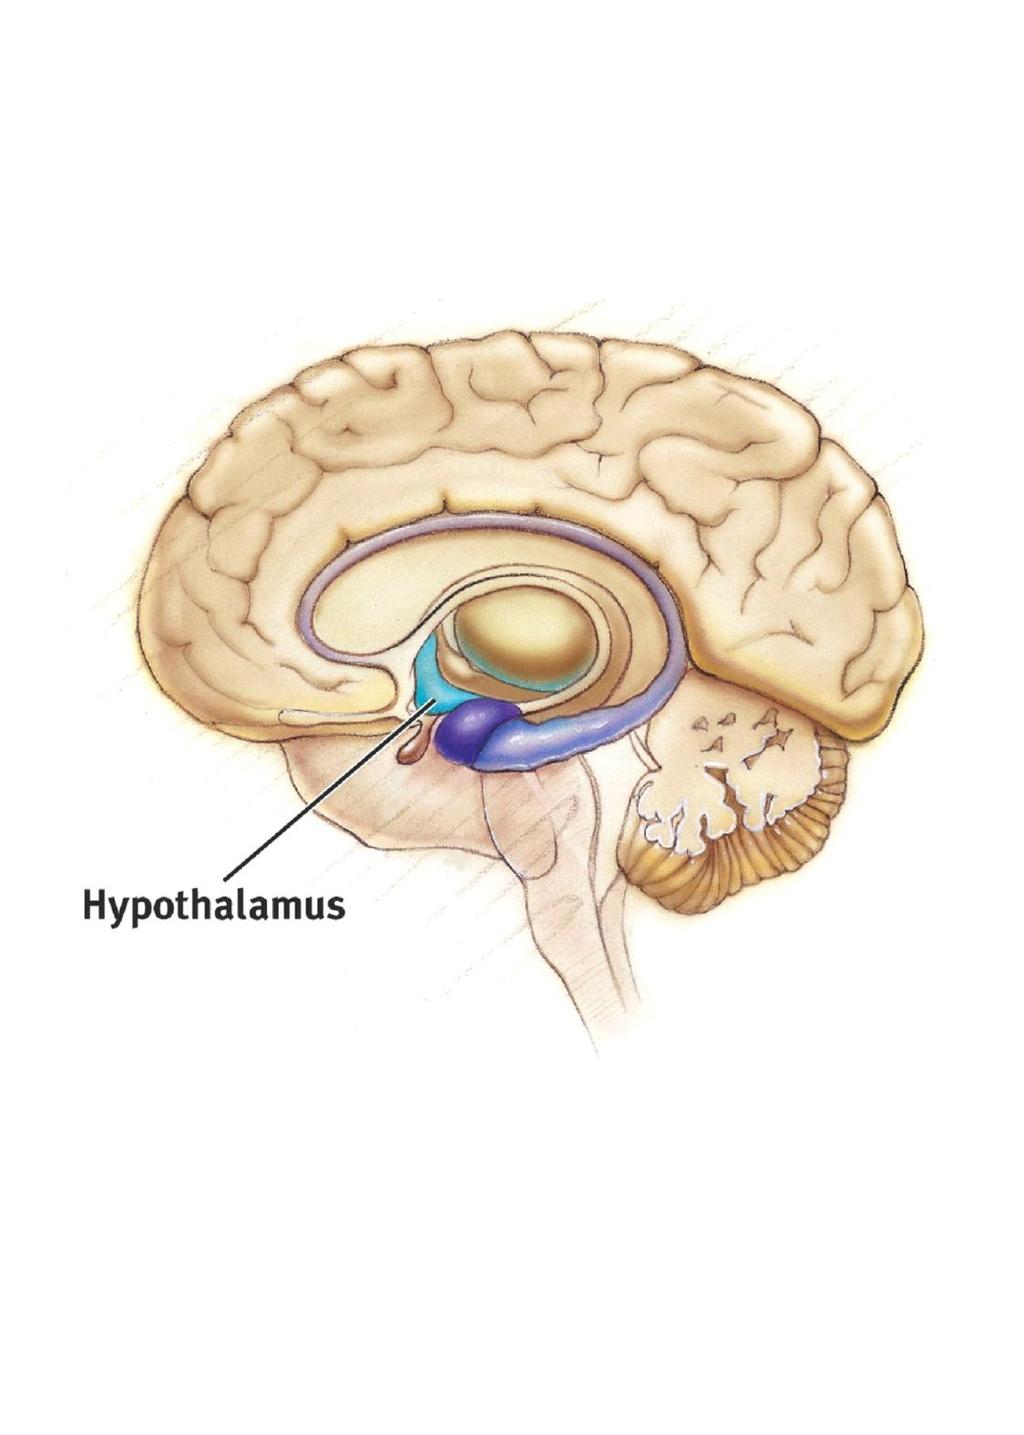 Hypothalamus The Hypothalamus lies below (hypo) the thalamus.